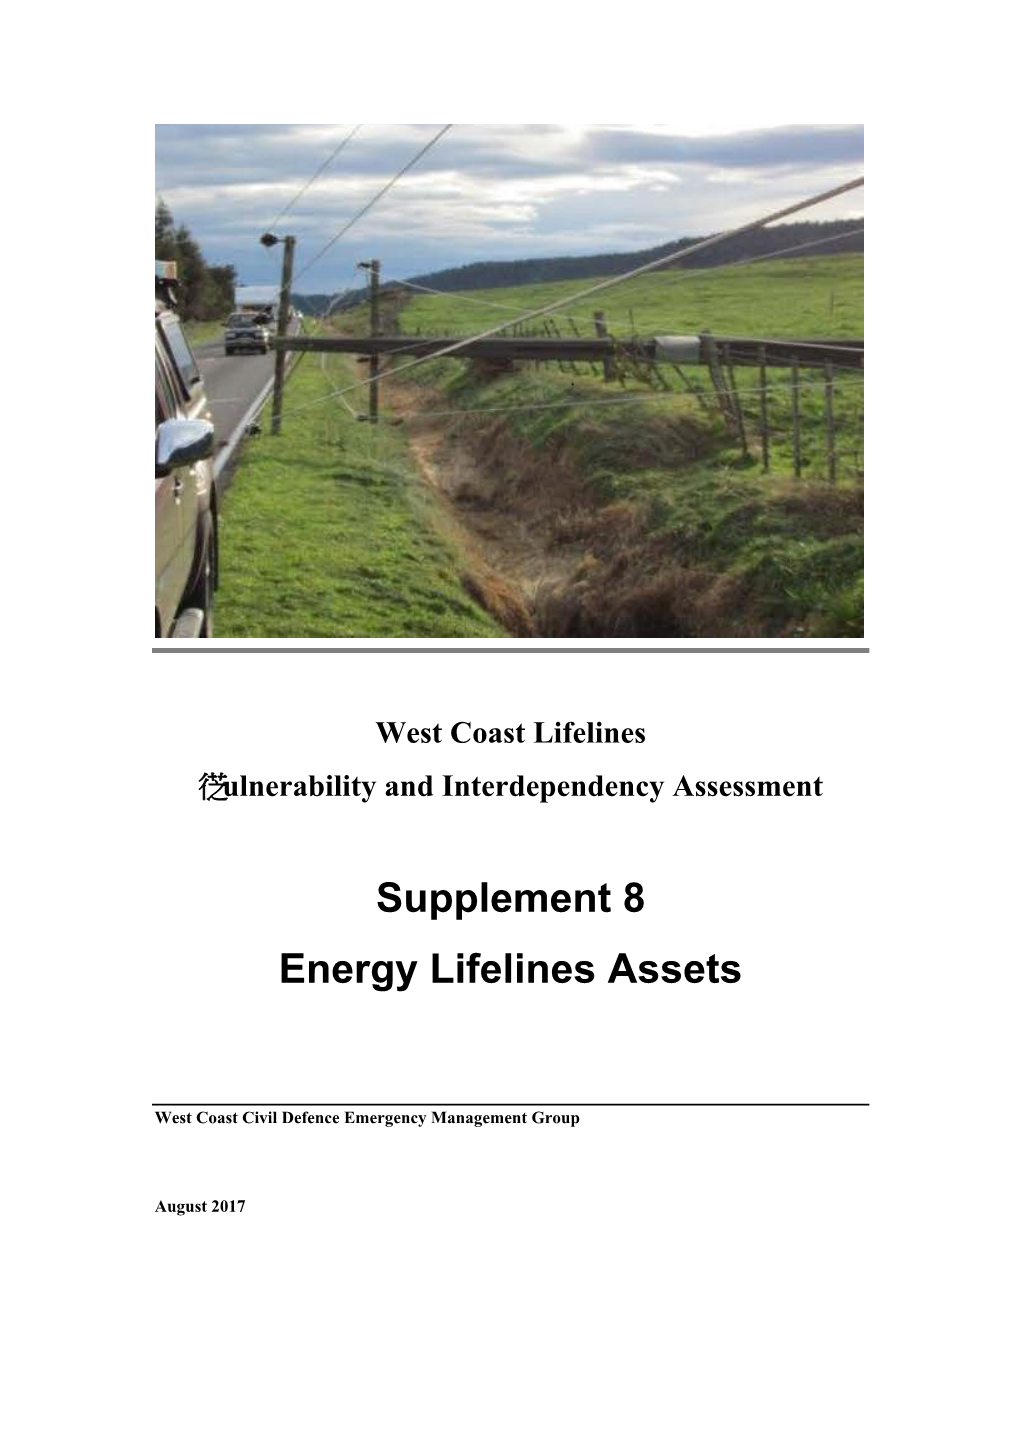 Supplement 8 Energy Lifelines Assets